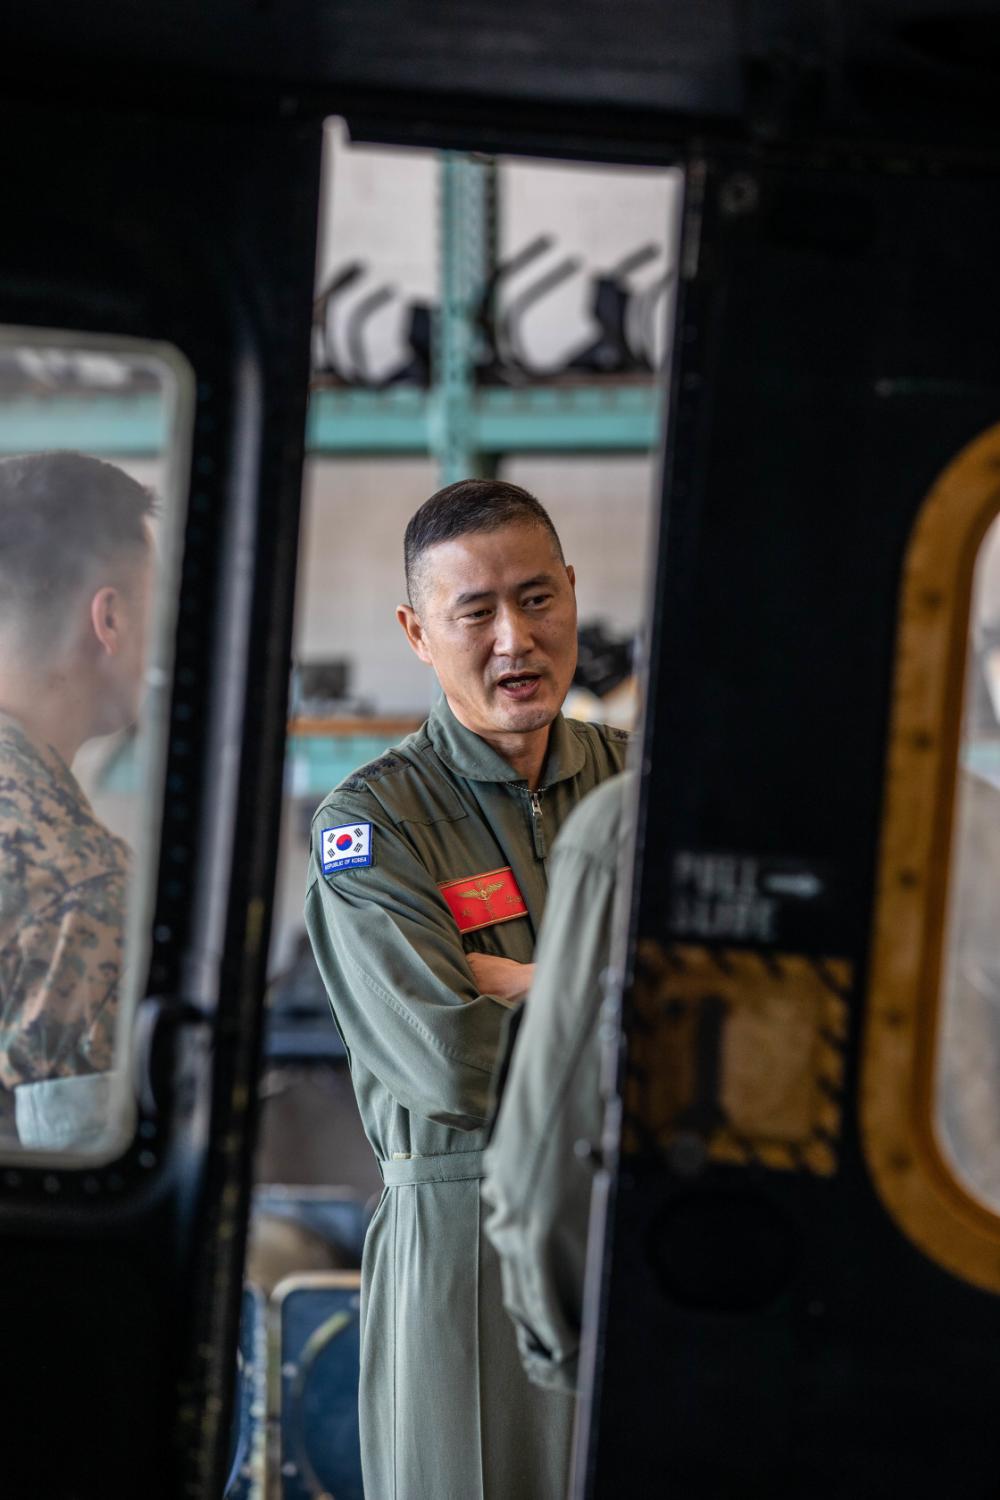 Republic of Korea Marine Corps Group Commander visits Marine Aircraft Group 39